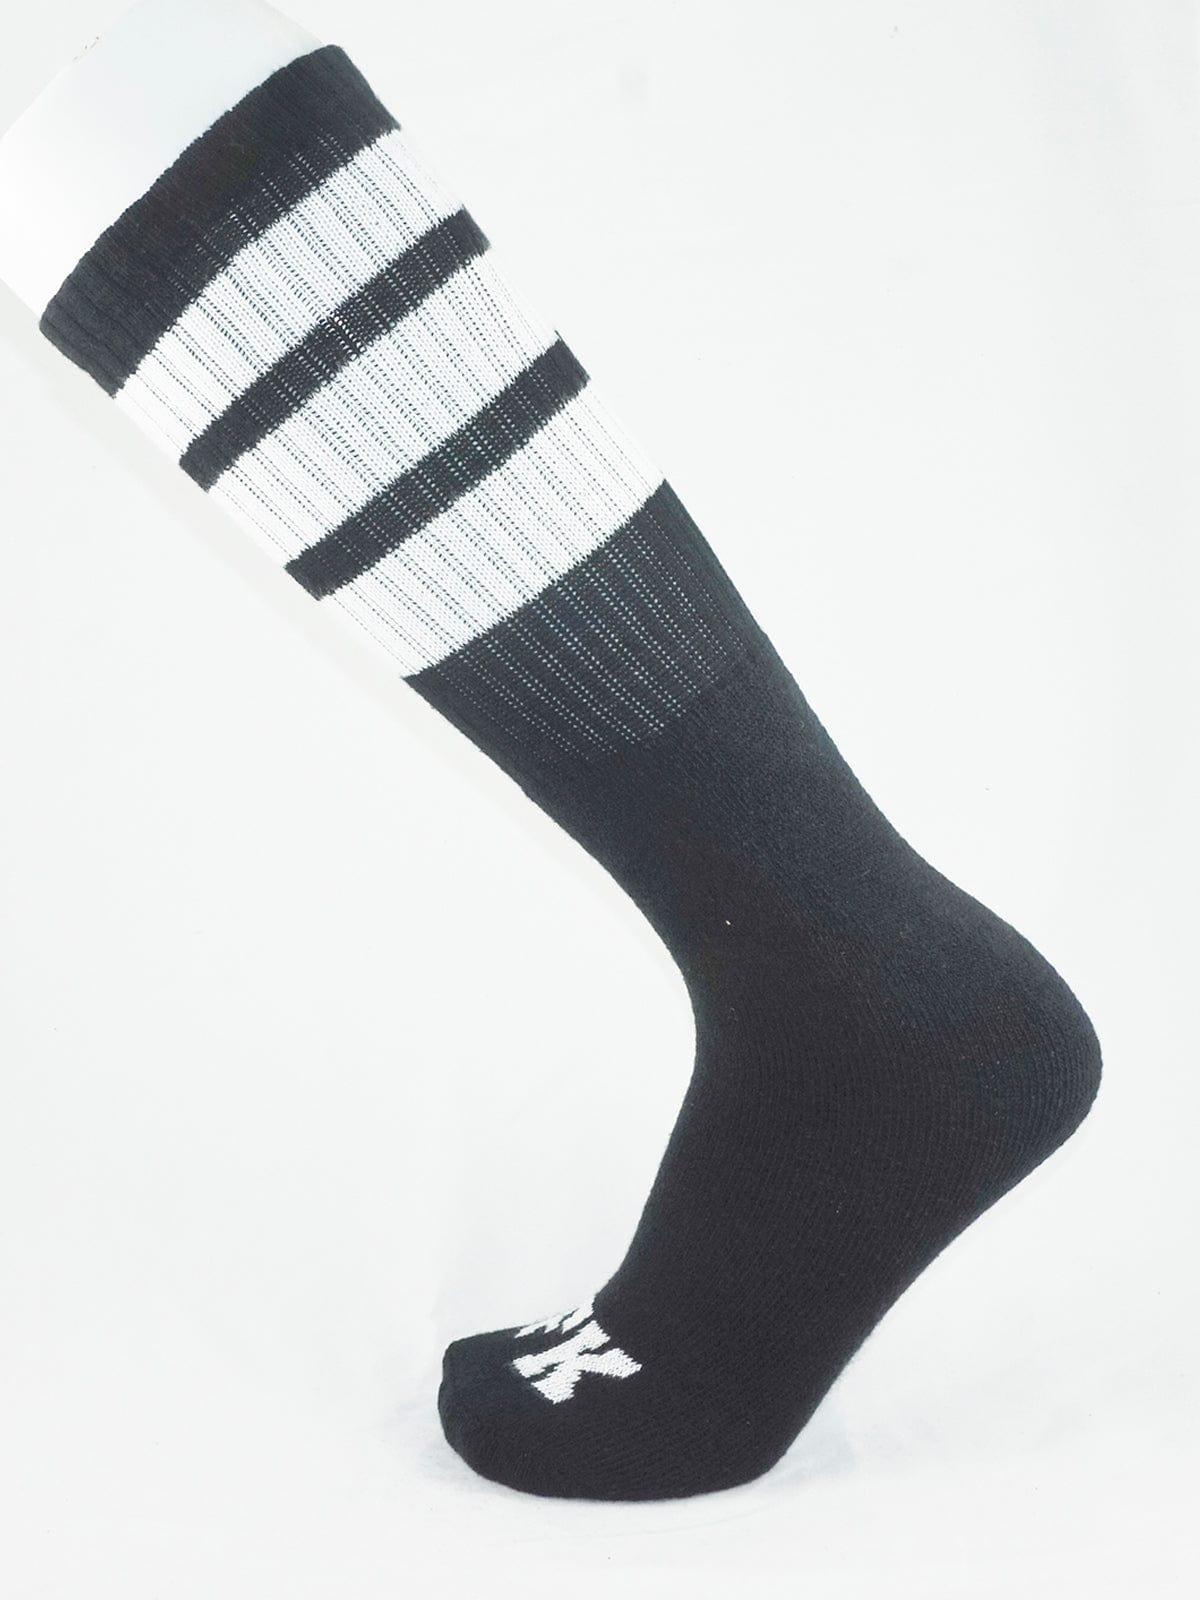 High Calf Sock